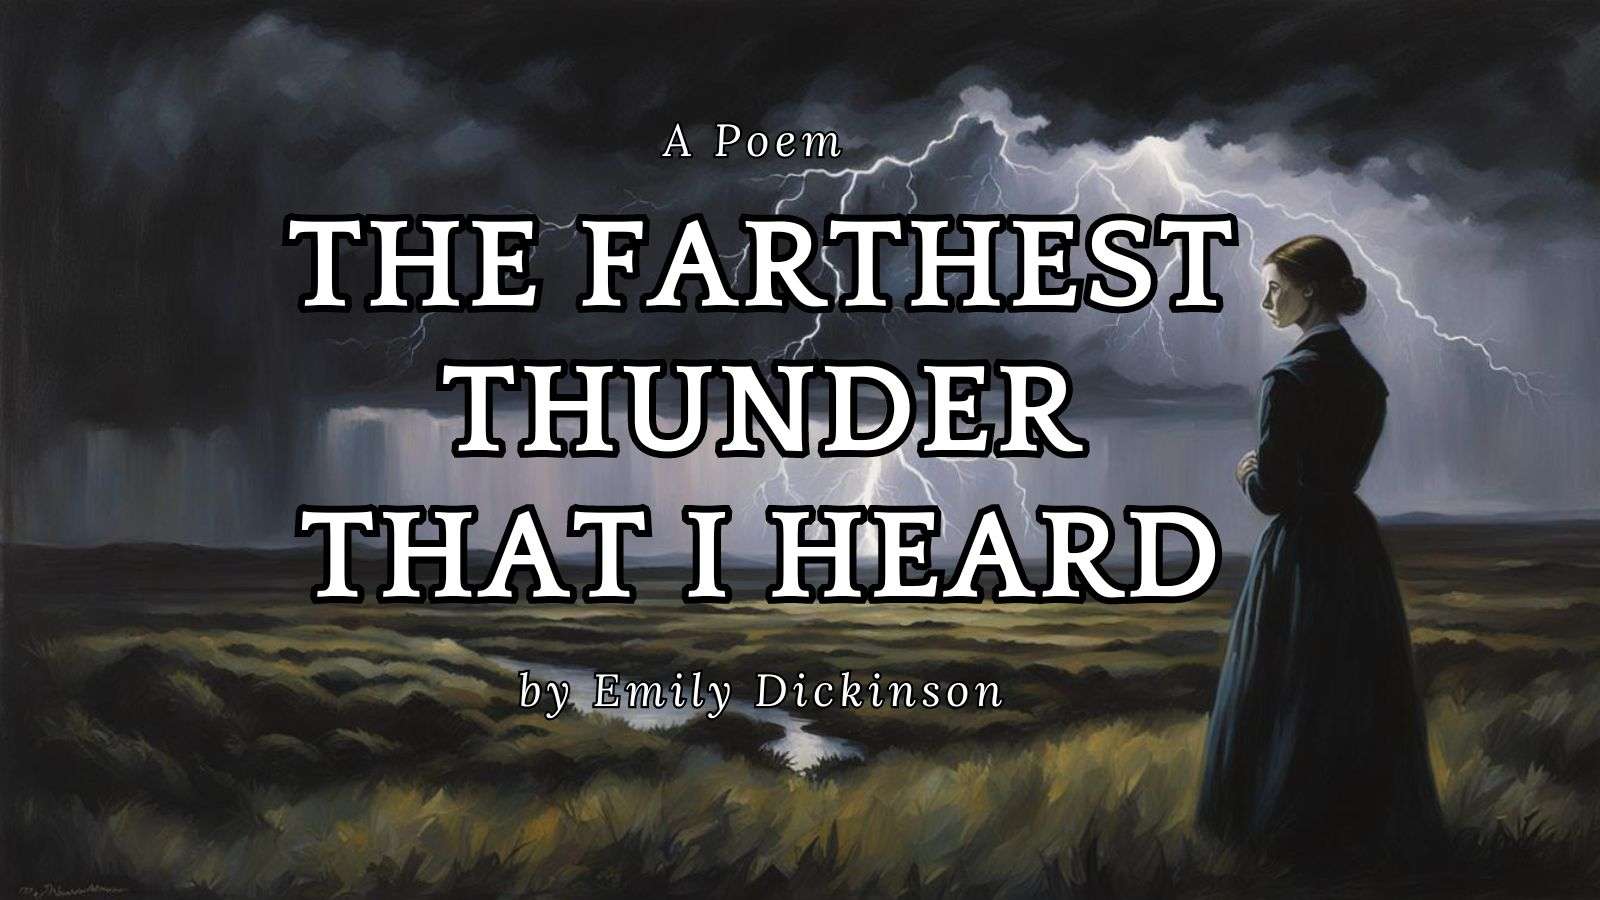 The farthest thunder that I heard XXVI by Emily Dickinson